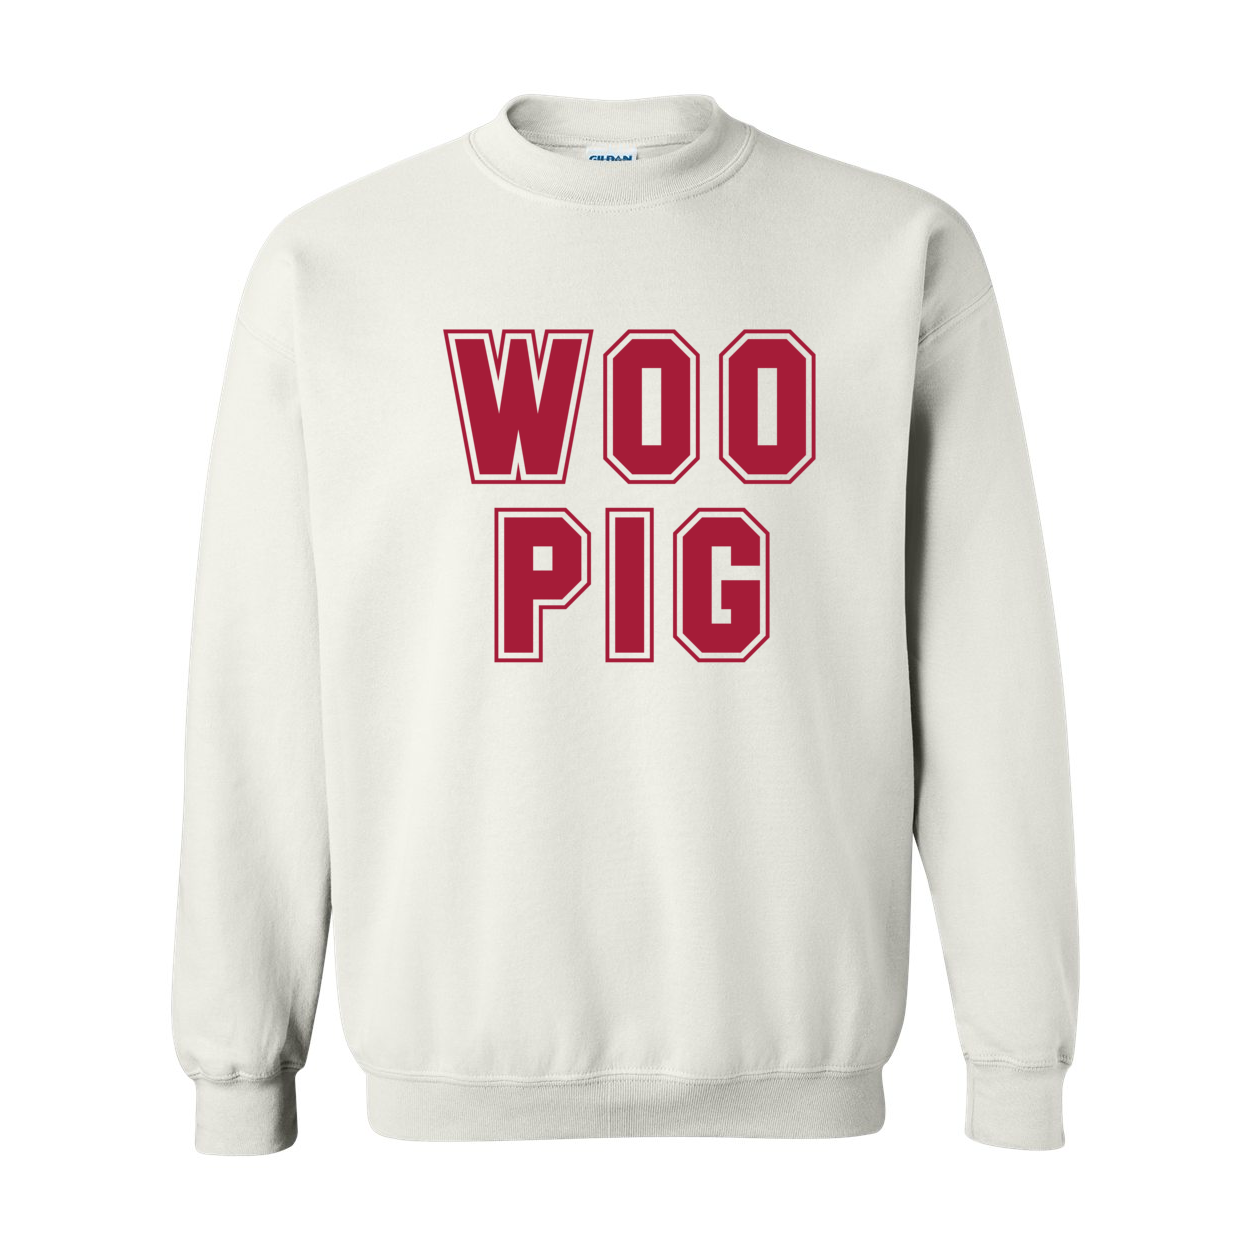 Woo Pig Crewneck Sweatshirt